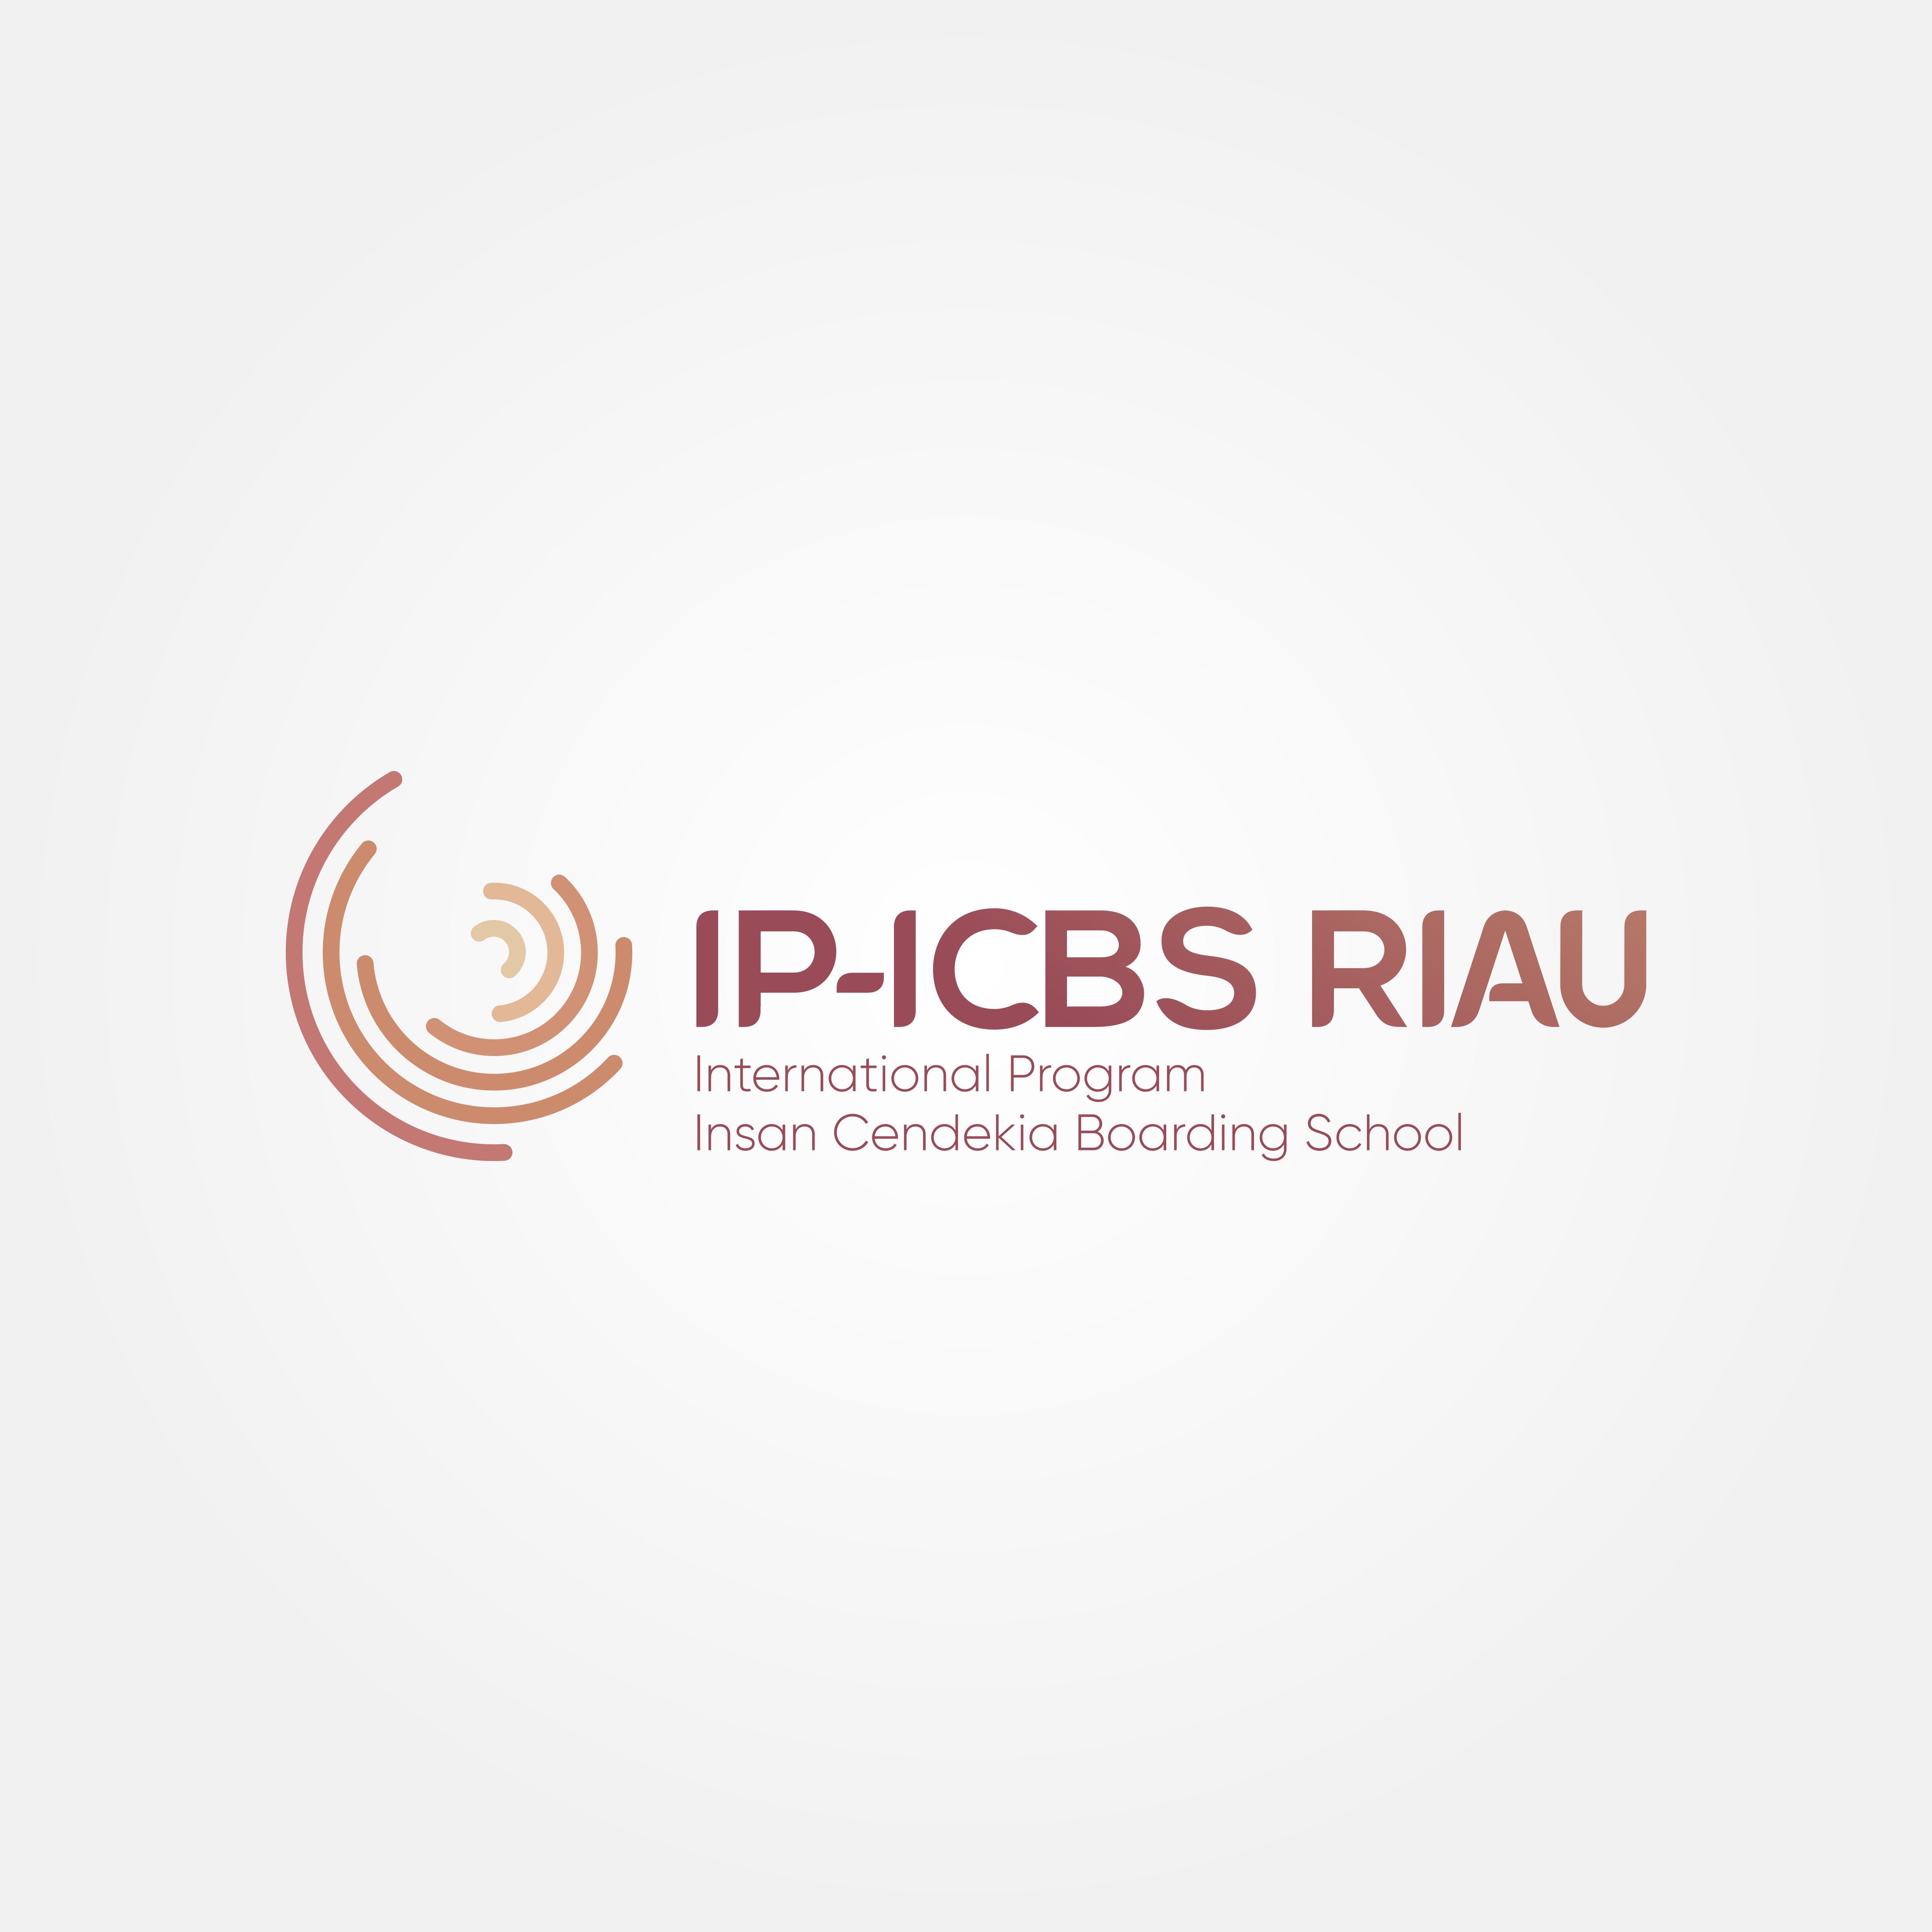 IP ICBS RIAU